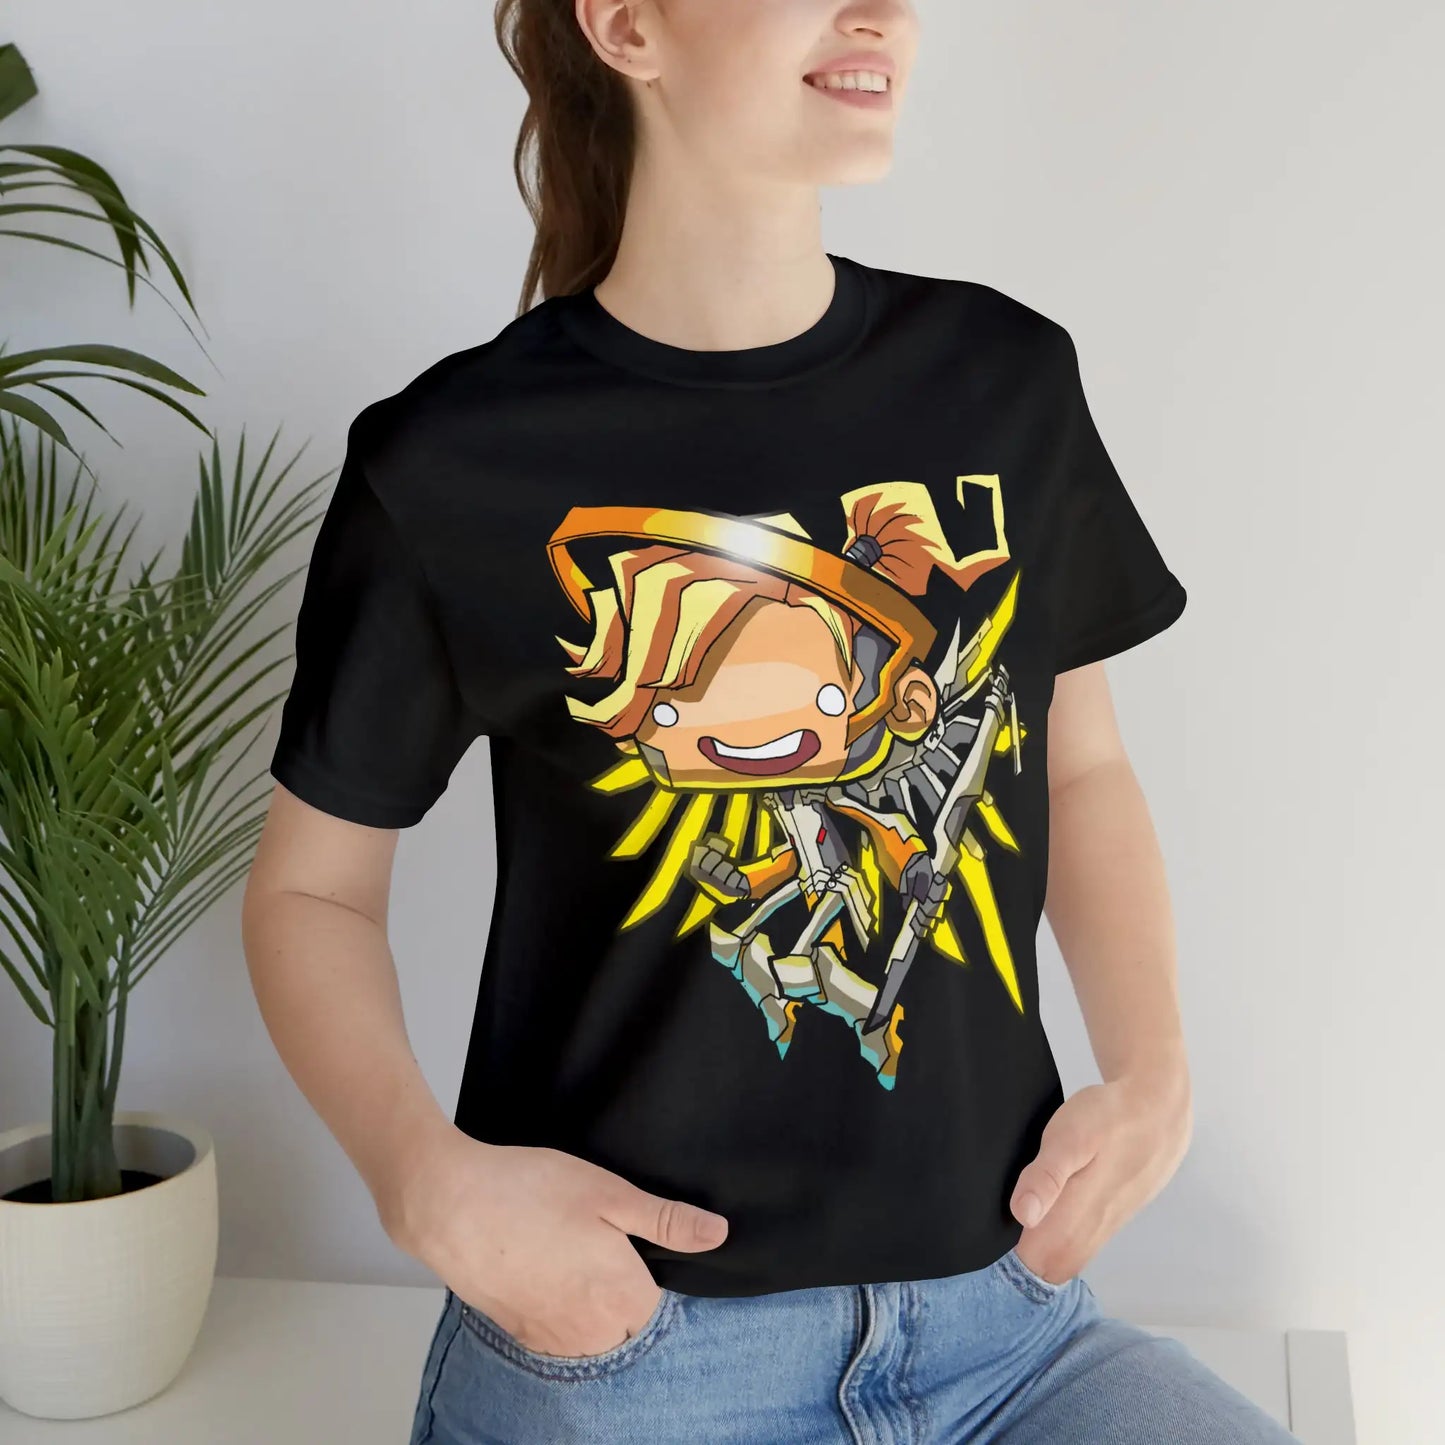 Mercy Overwatch T-Shirt Cartoon Chibi Style Gamer DPS Healer Gift Tee Unisex For Men and Women